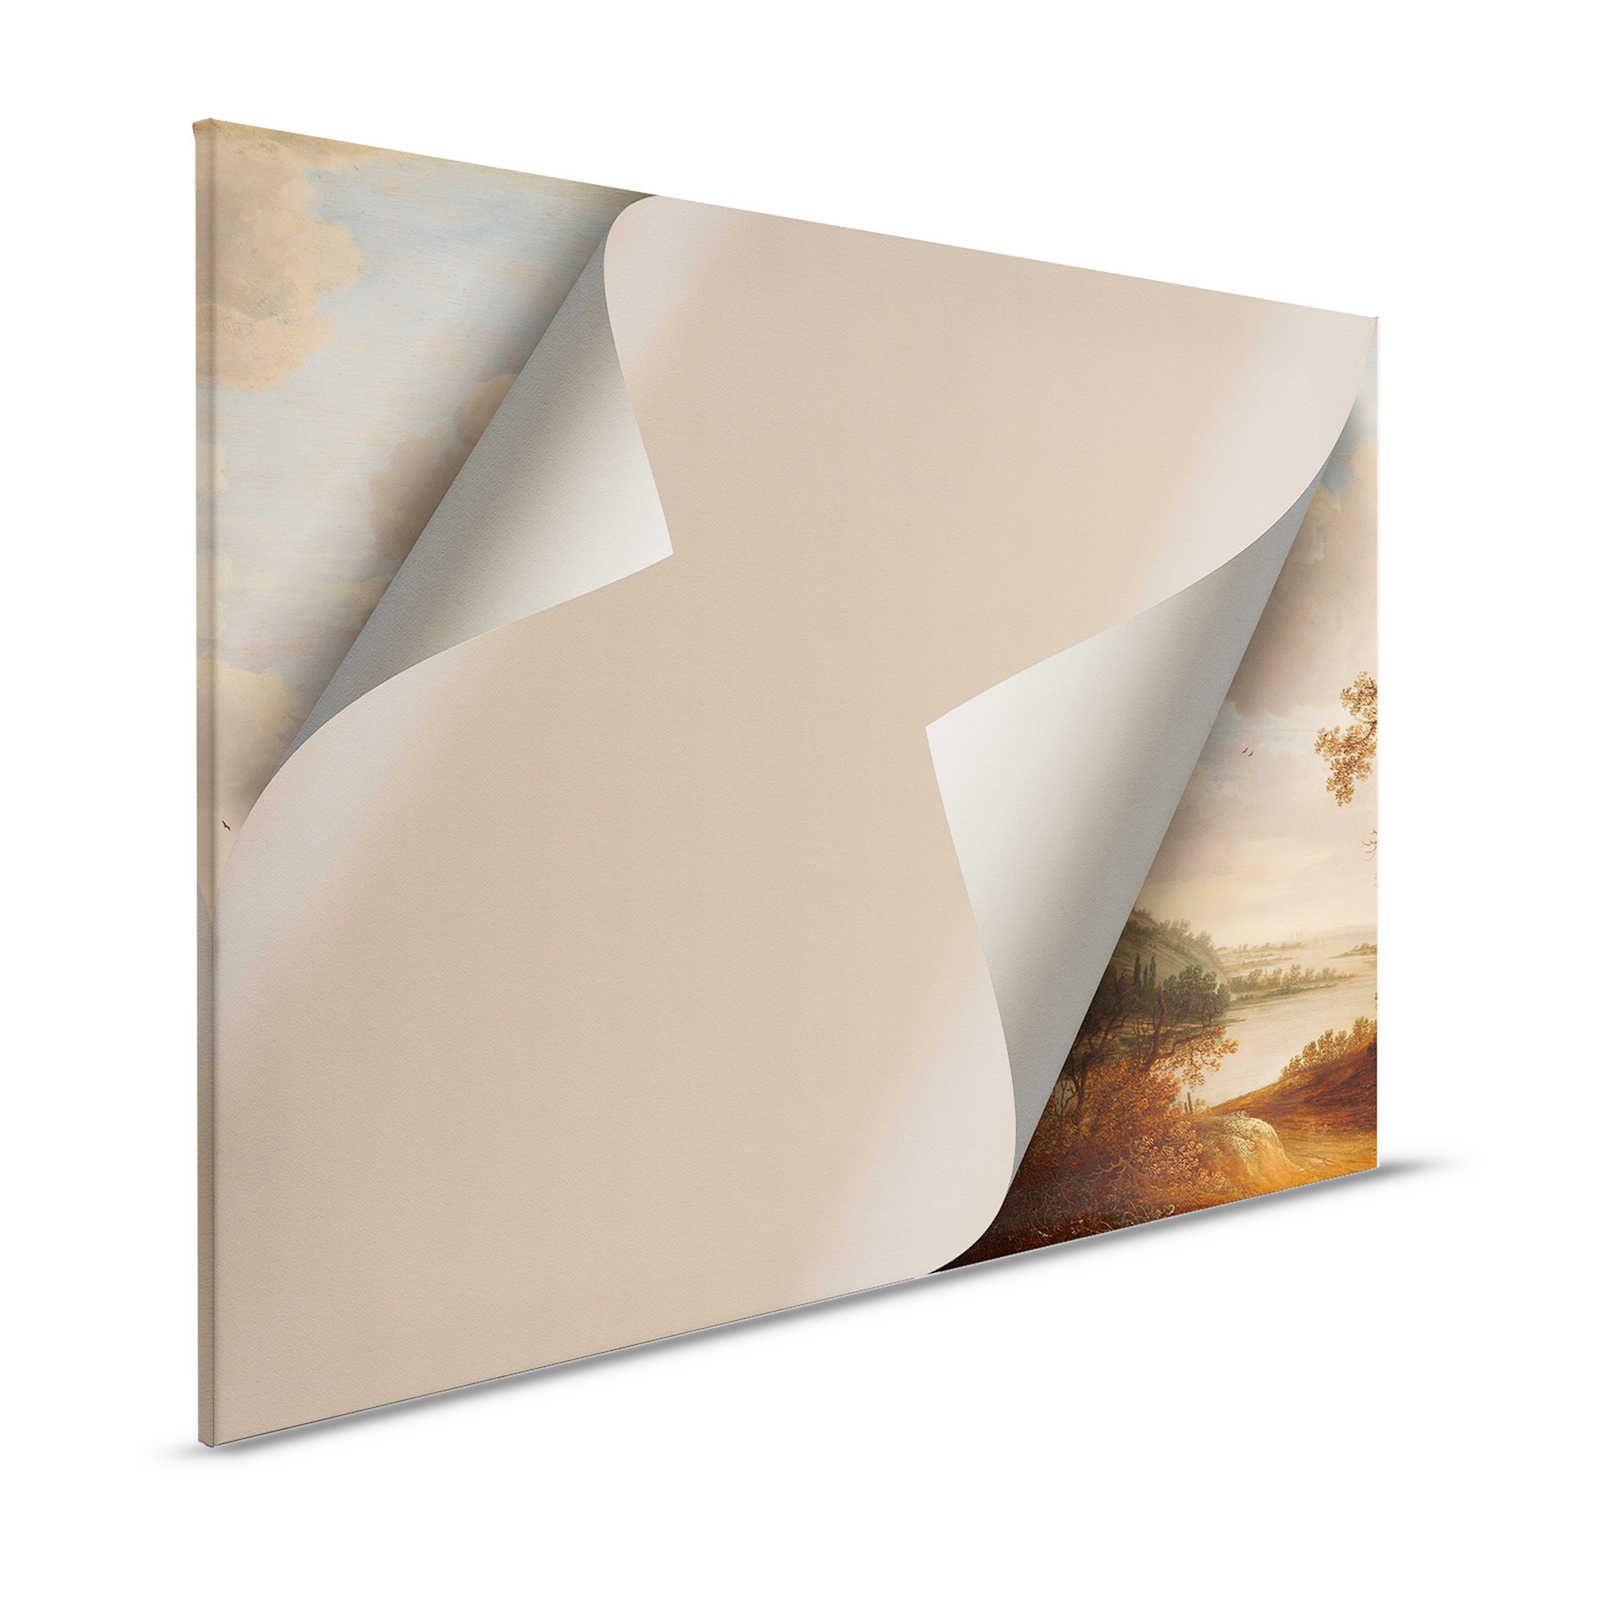 Luoghi nascosti 2 - Pittura su tela 3D motivo arte nascosta - 1,20 m x 0,80 m
